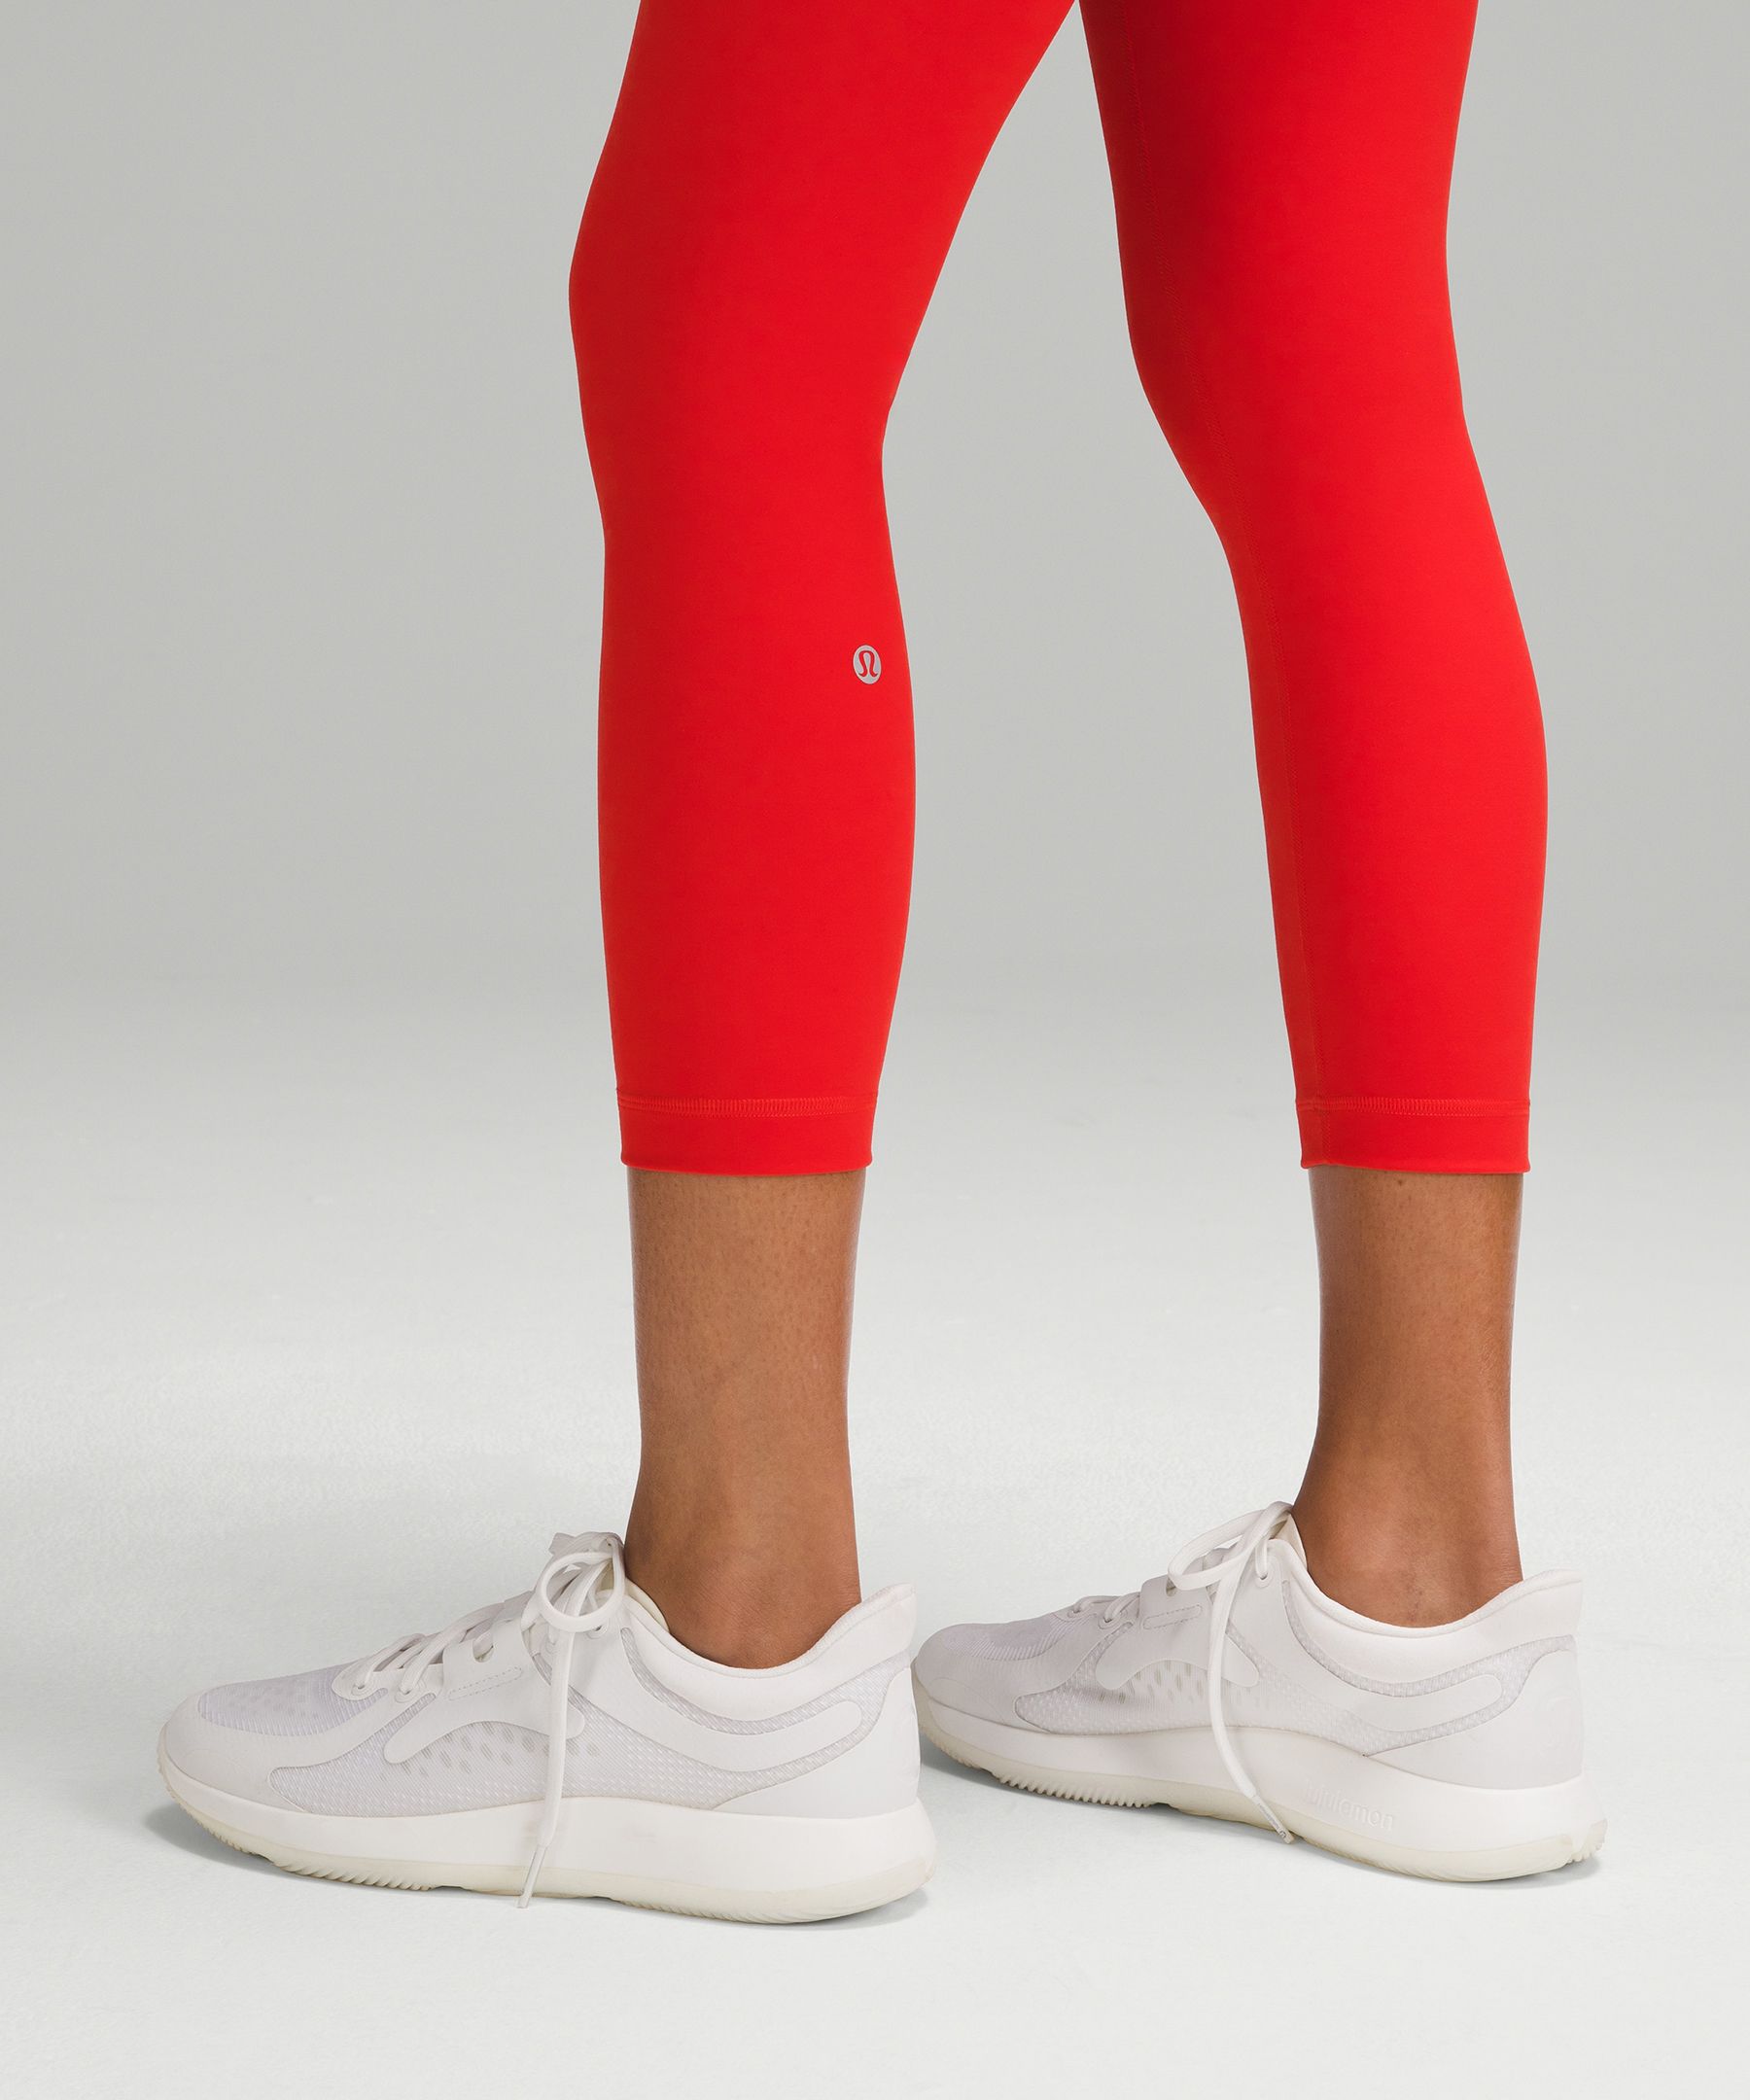 [SALE!] Lululemon Wunder Train Cropped Yoga Pants Tights Leggings Capri  Blue Size 2 20 Asia Fit